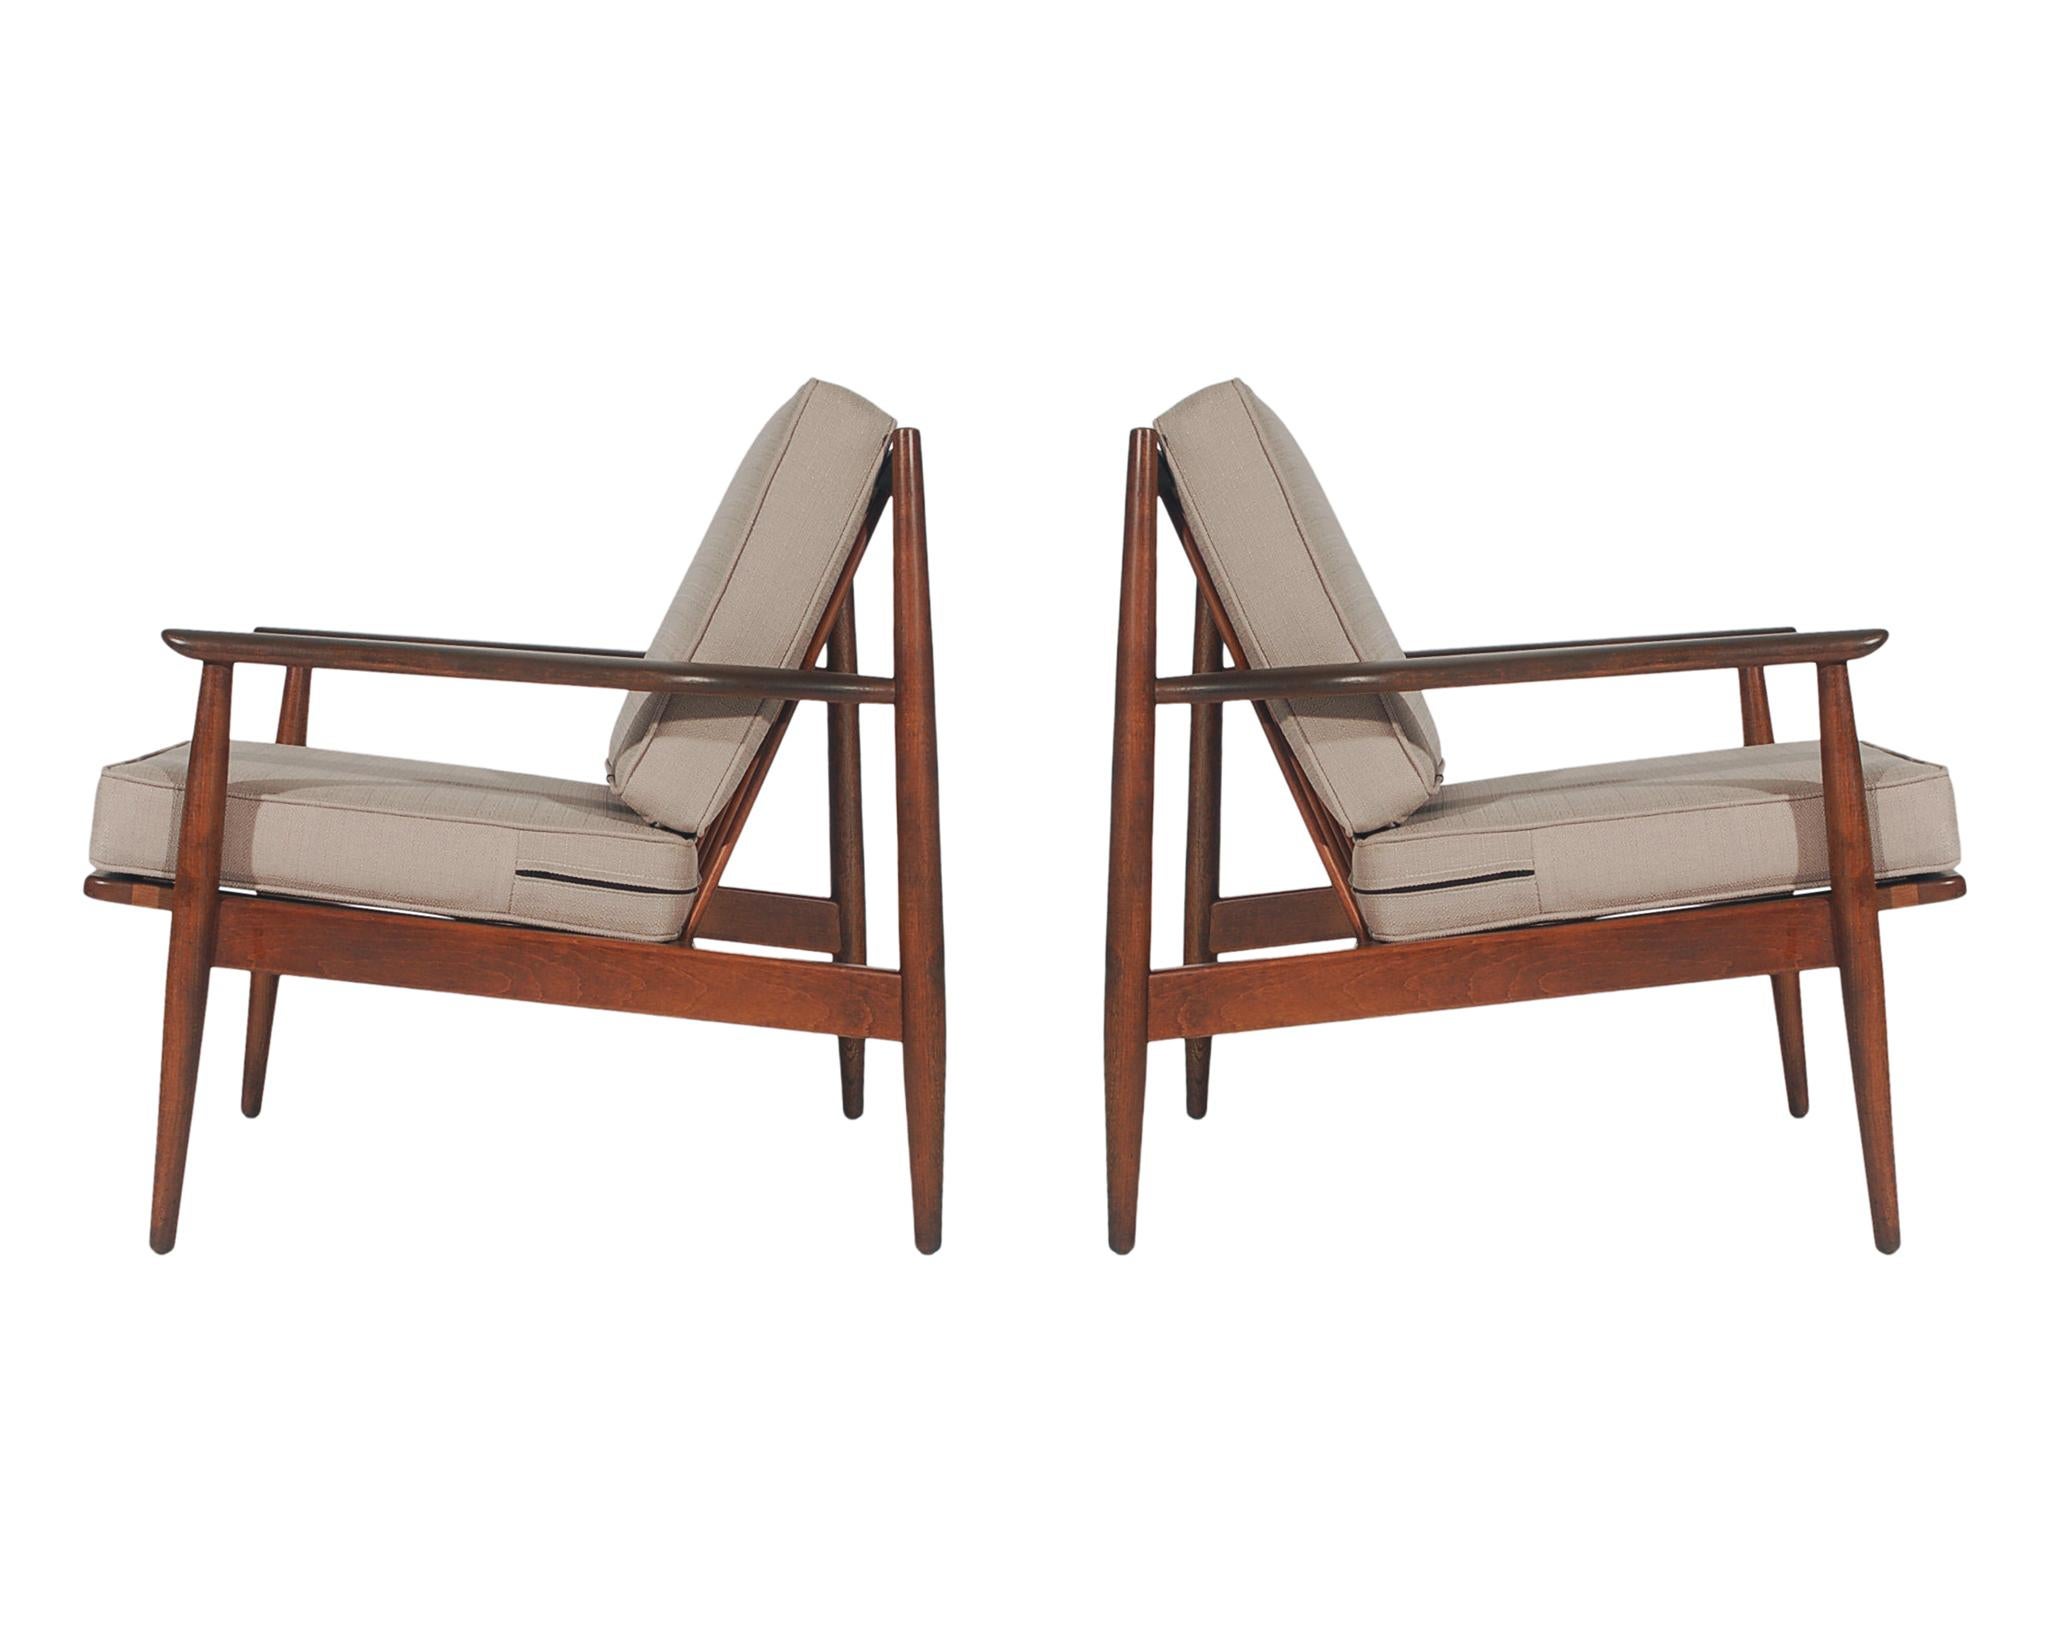 American Mid Century Danish Modern Walnut Armchair Lounge Chairs in Grey Tweed